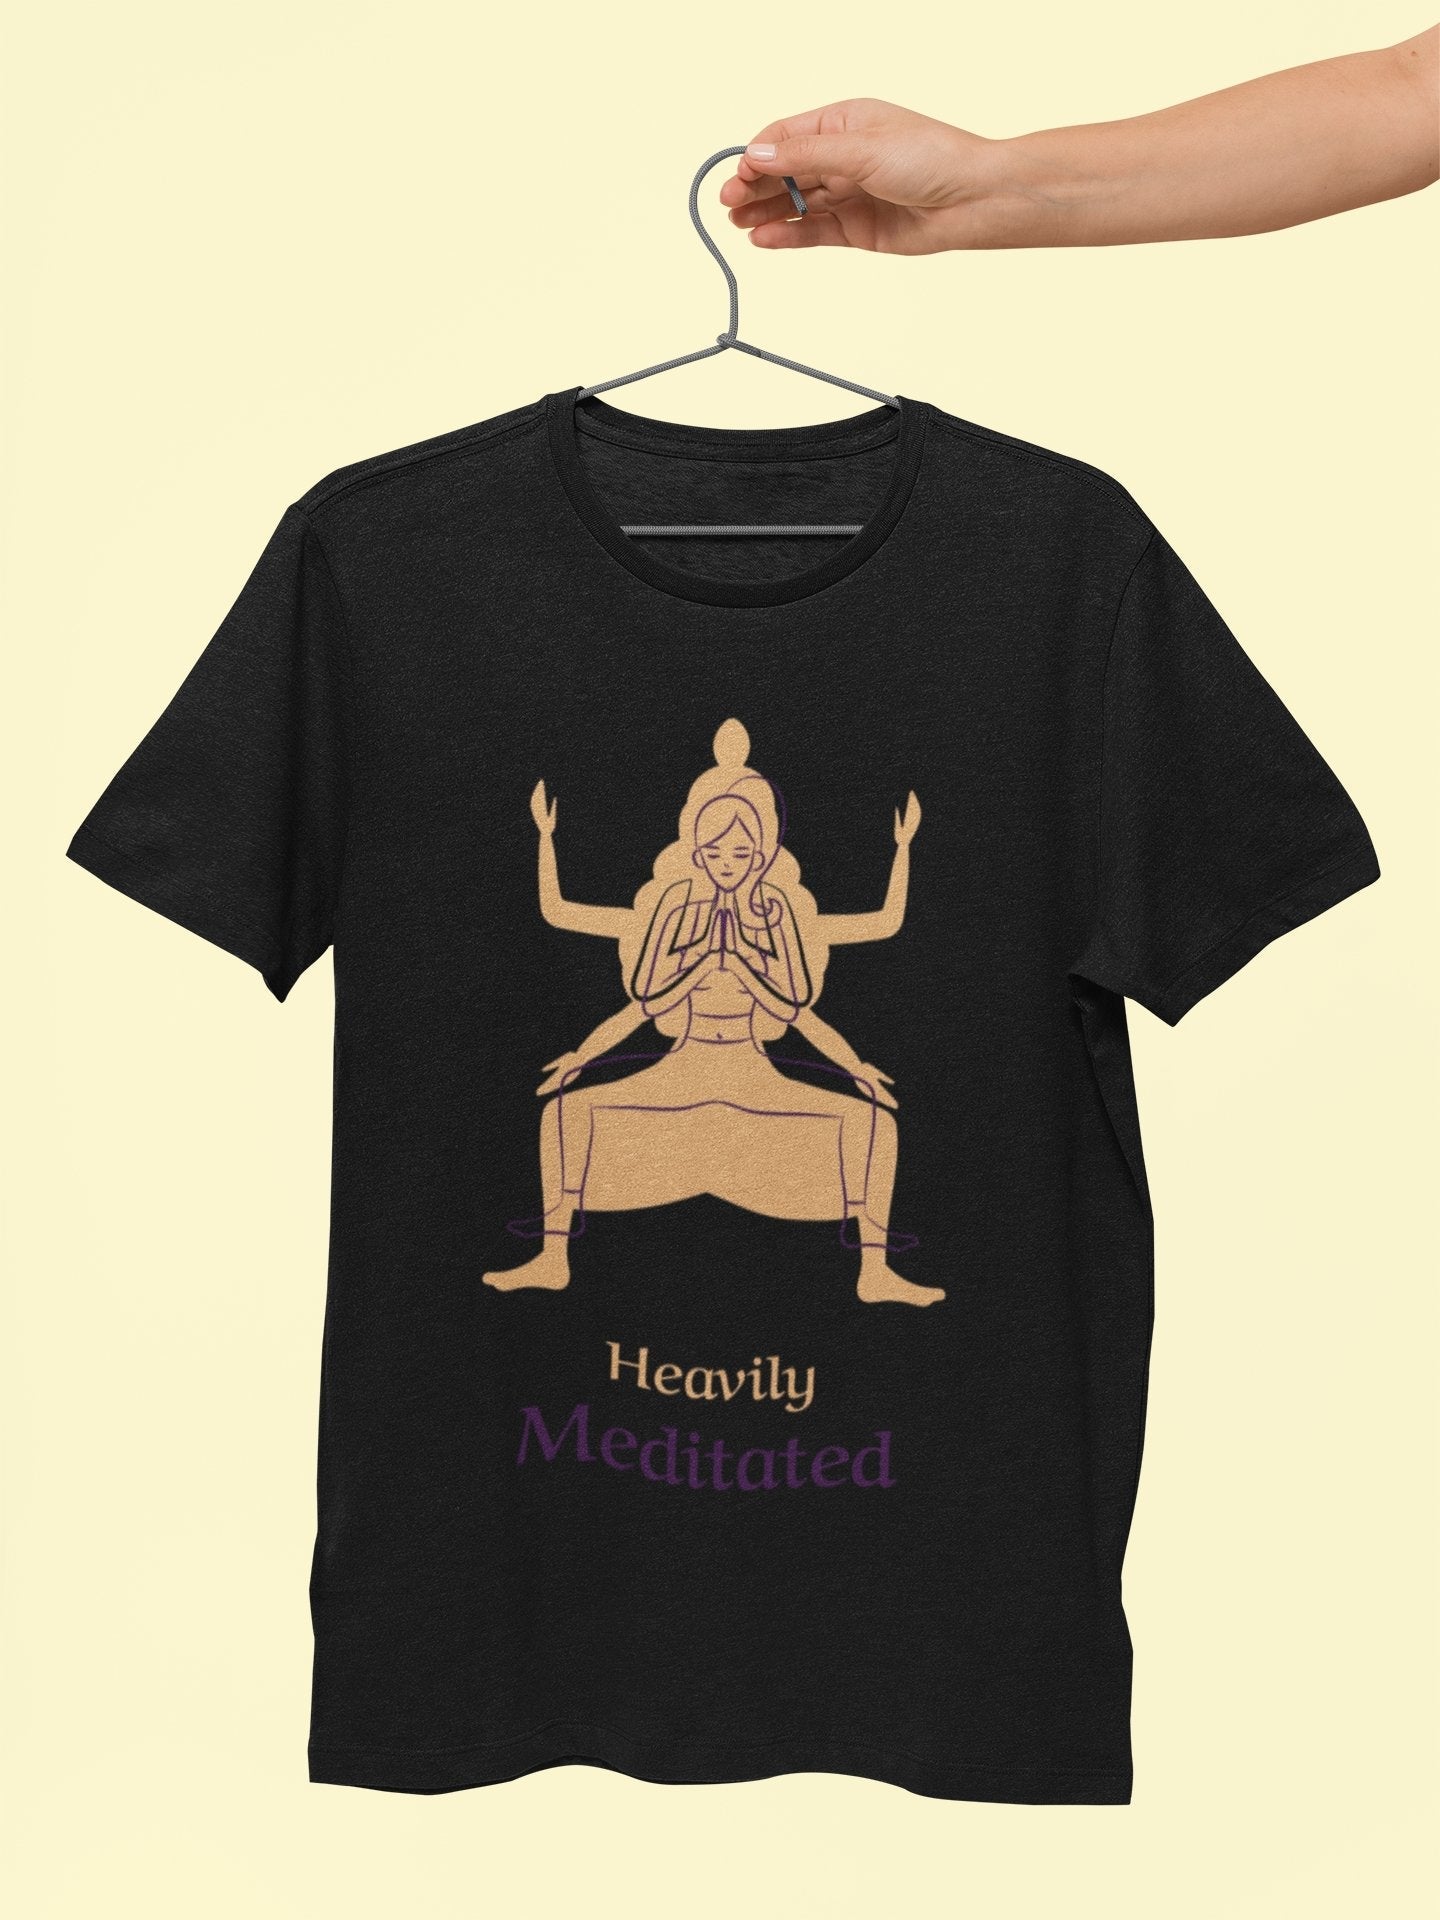 thelegalgang,Heavily Meditated Yoga T shirt for Men,MEN.